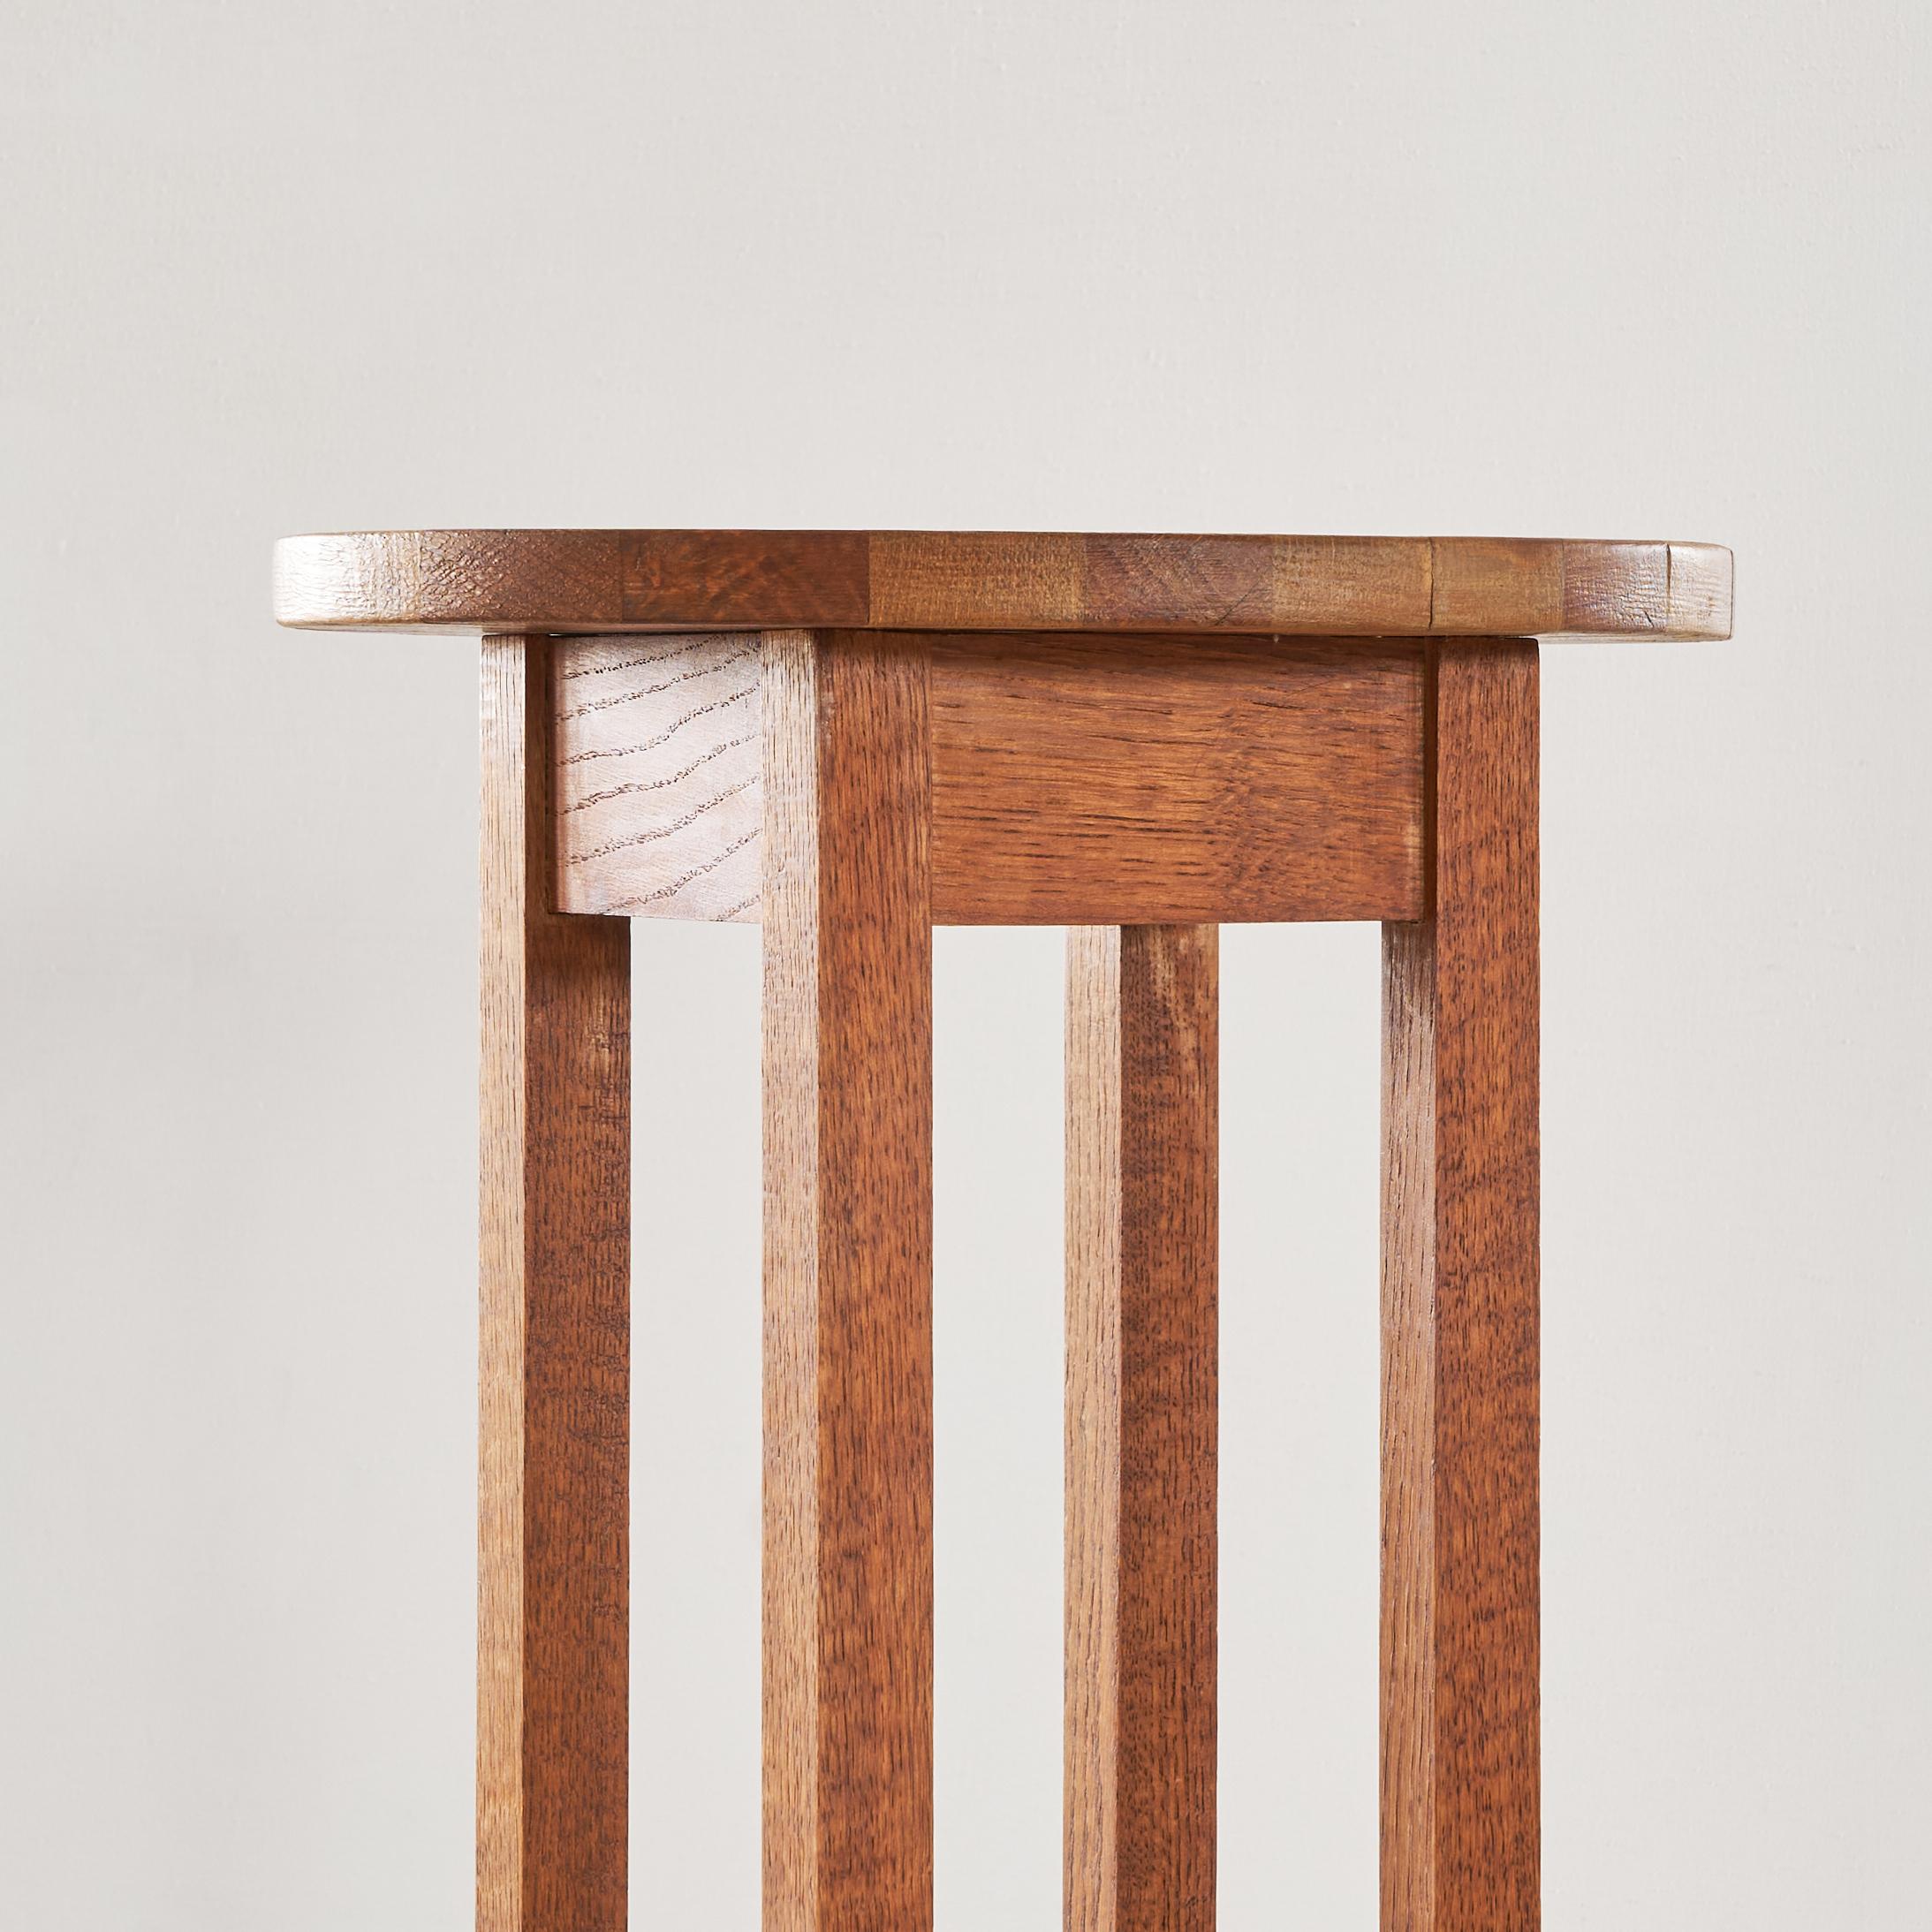 European Art Deco Gueridon or Pedestal Table 1950s For Sale